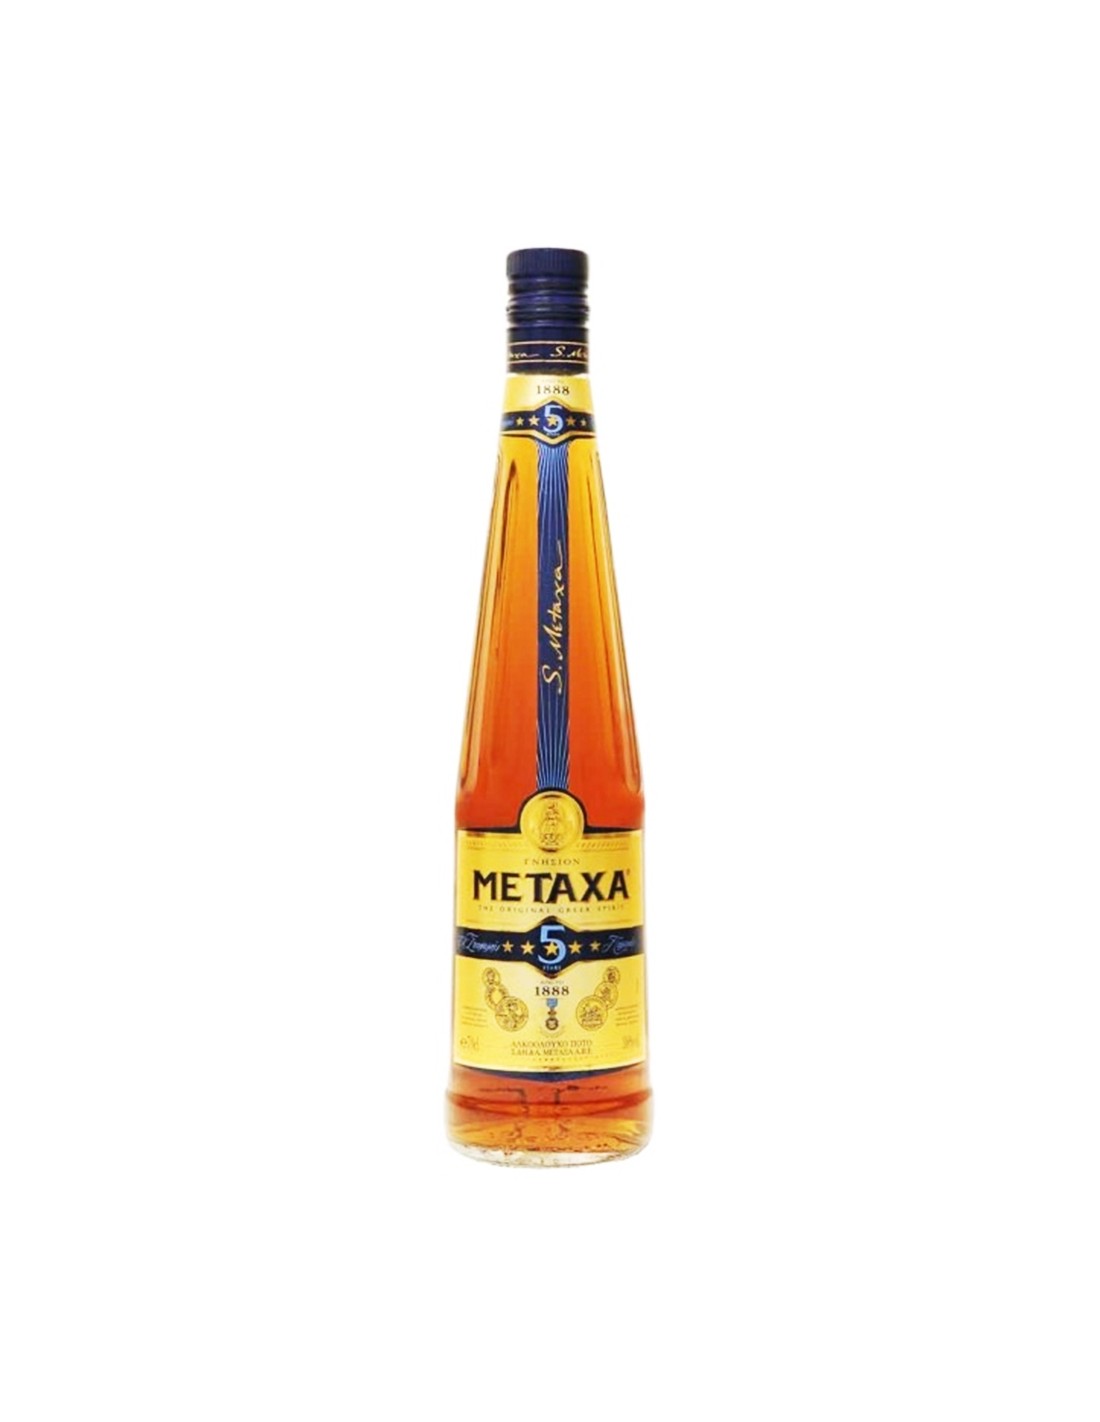 Brandy Metaxa 5*, 38% alc., 0.7L, Grecia alcooldiscount.ro